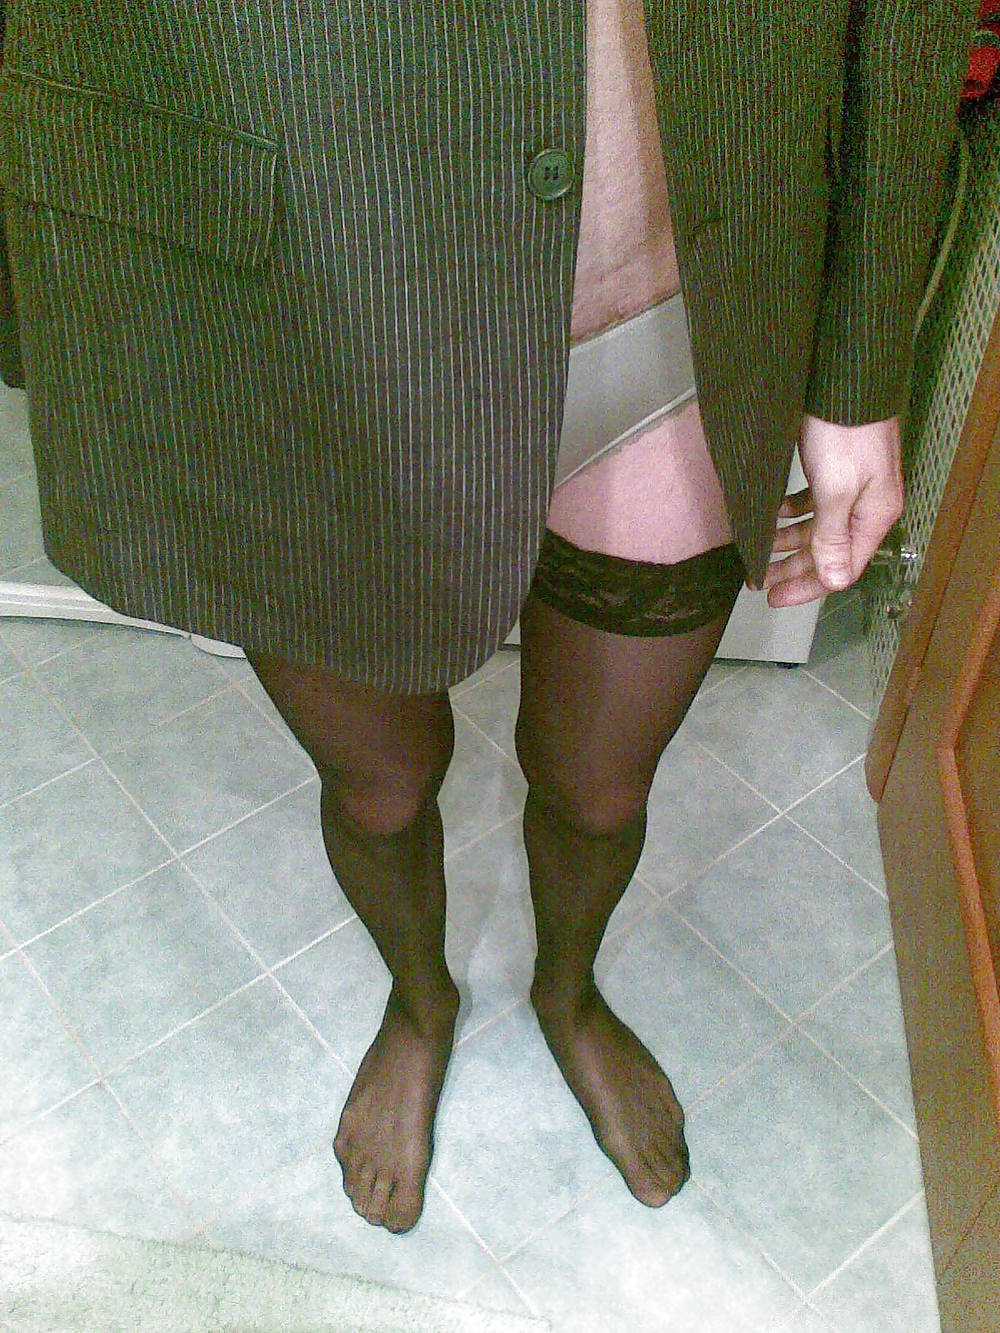 Marta: shemale stockings mirror